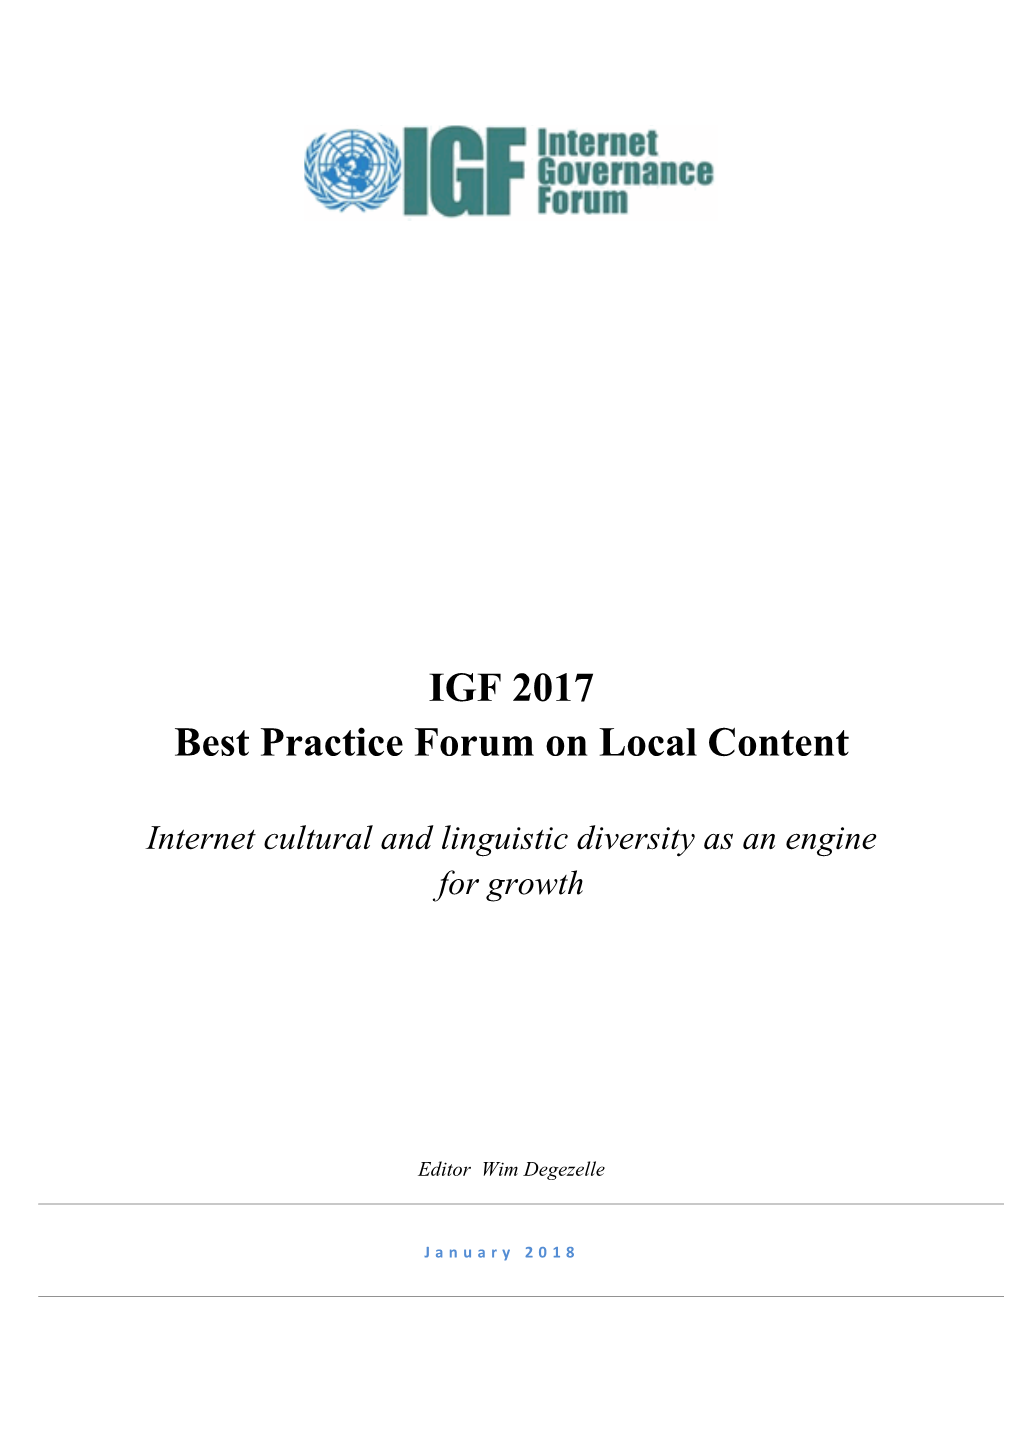 IGF 2017 Best Practice Forum on Local Content